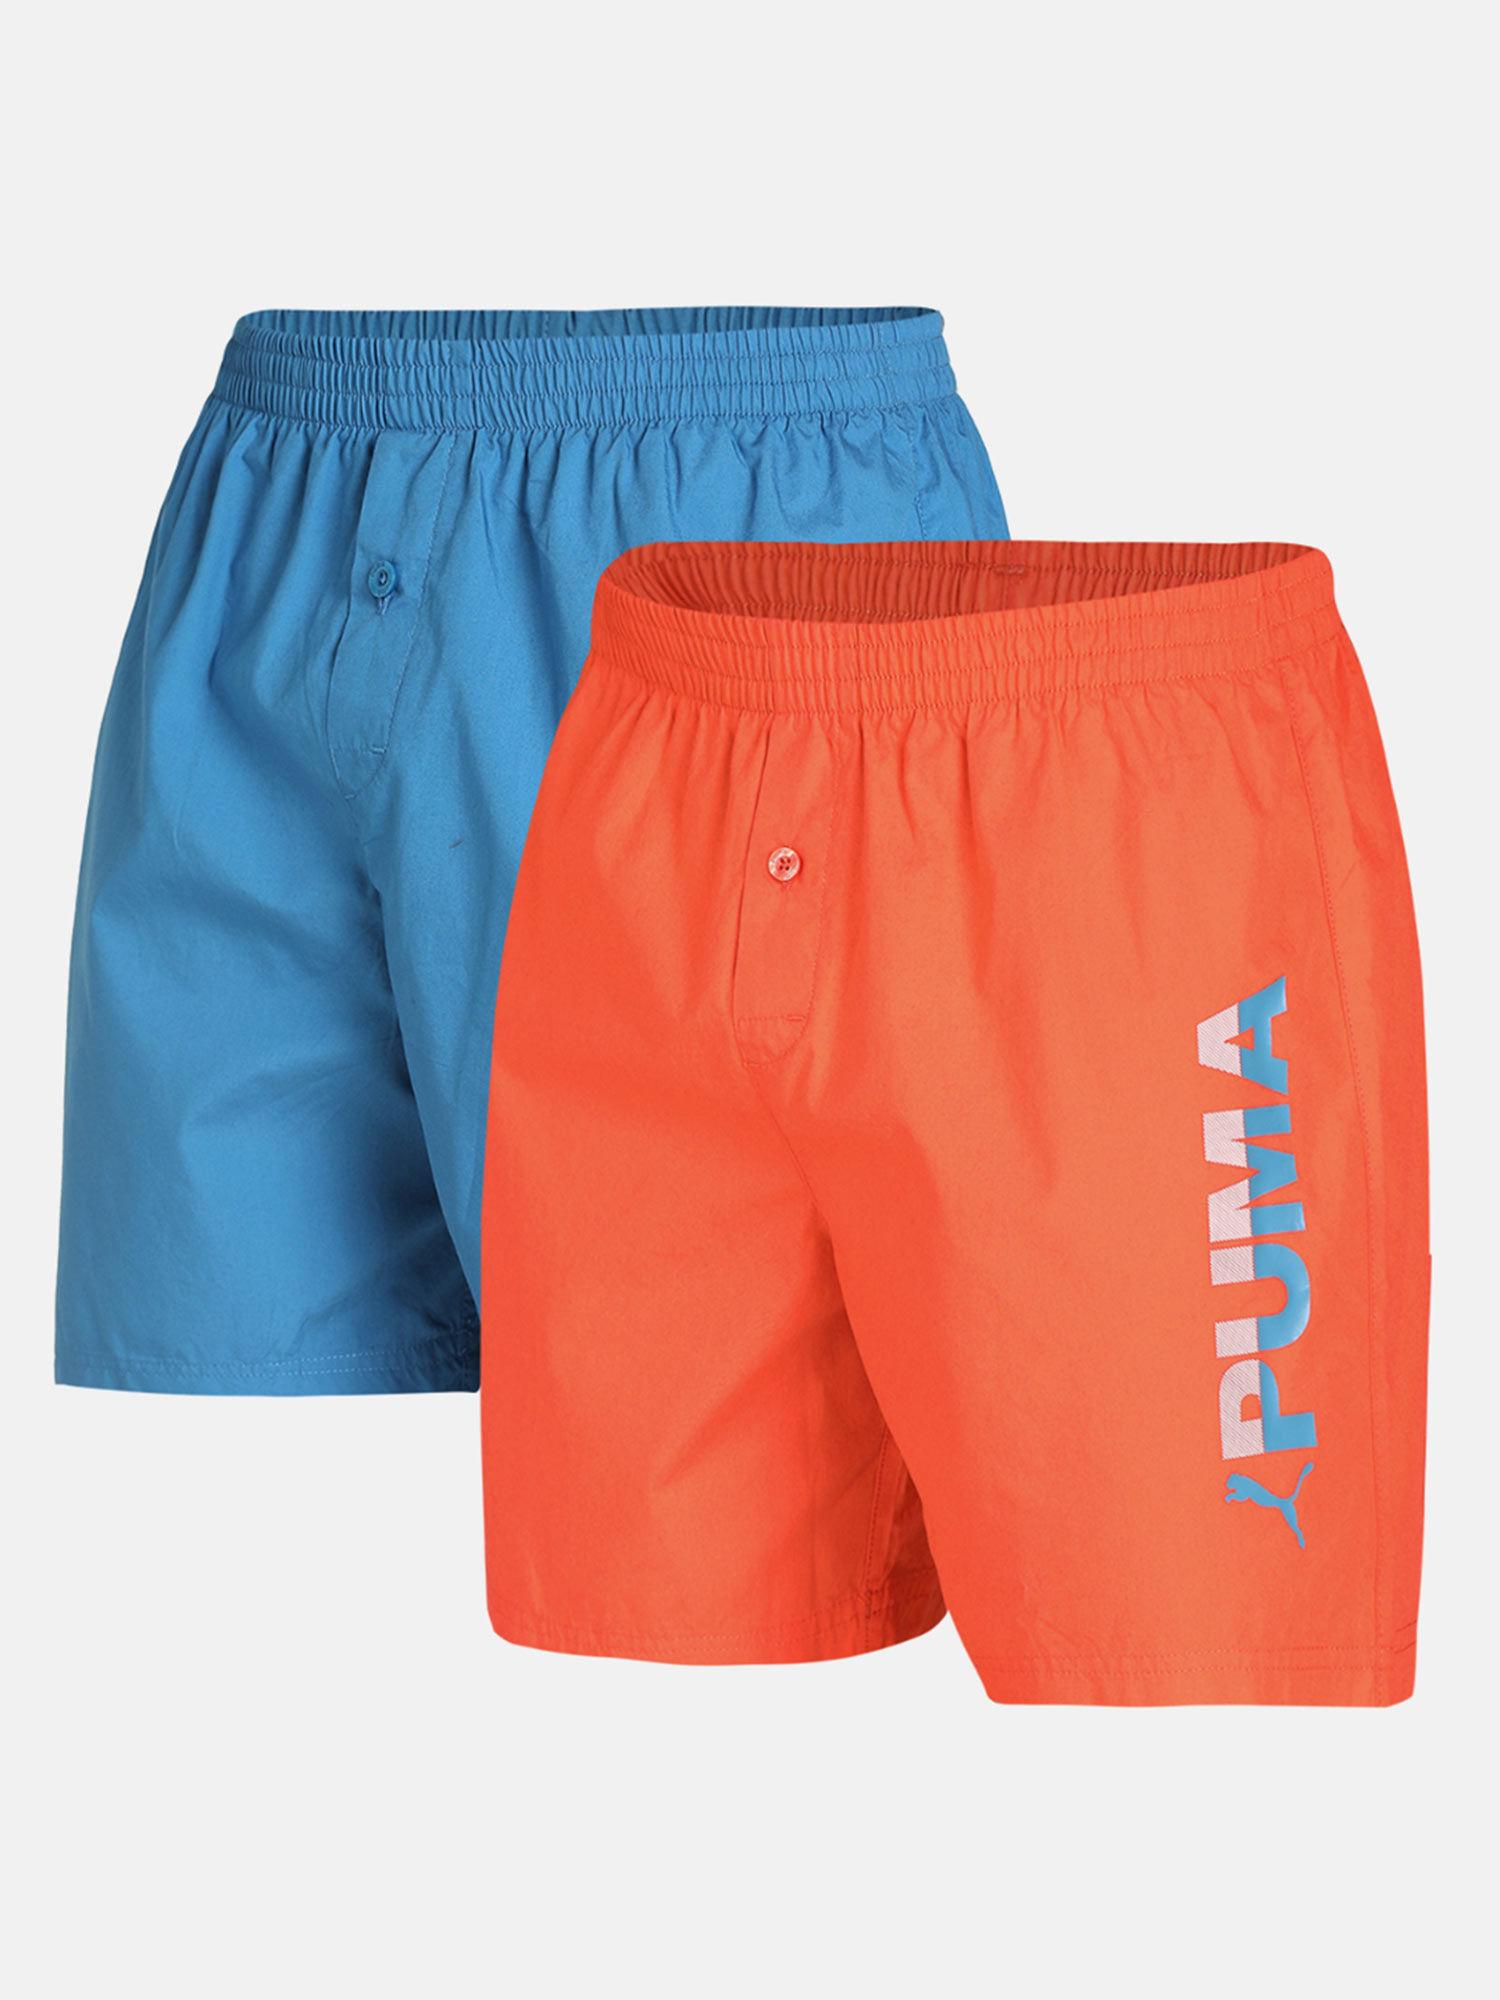 basic-woven-orange-&-blue-boxers-(pack-of-2)